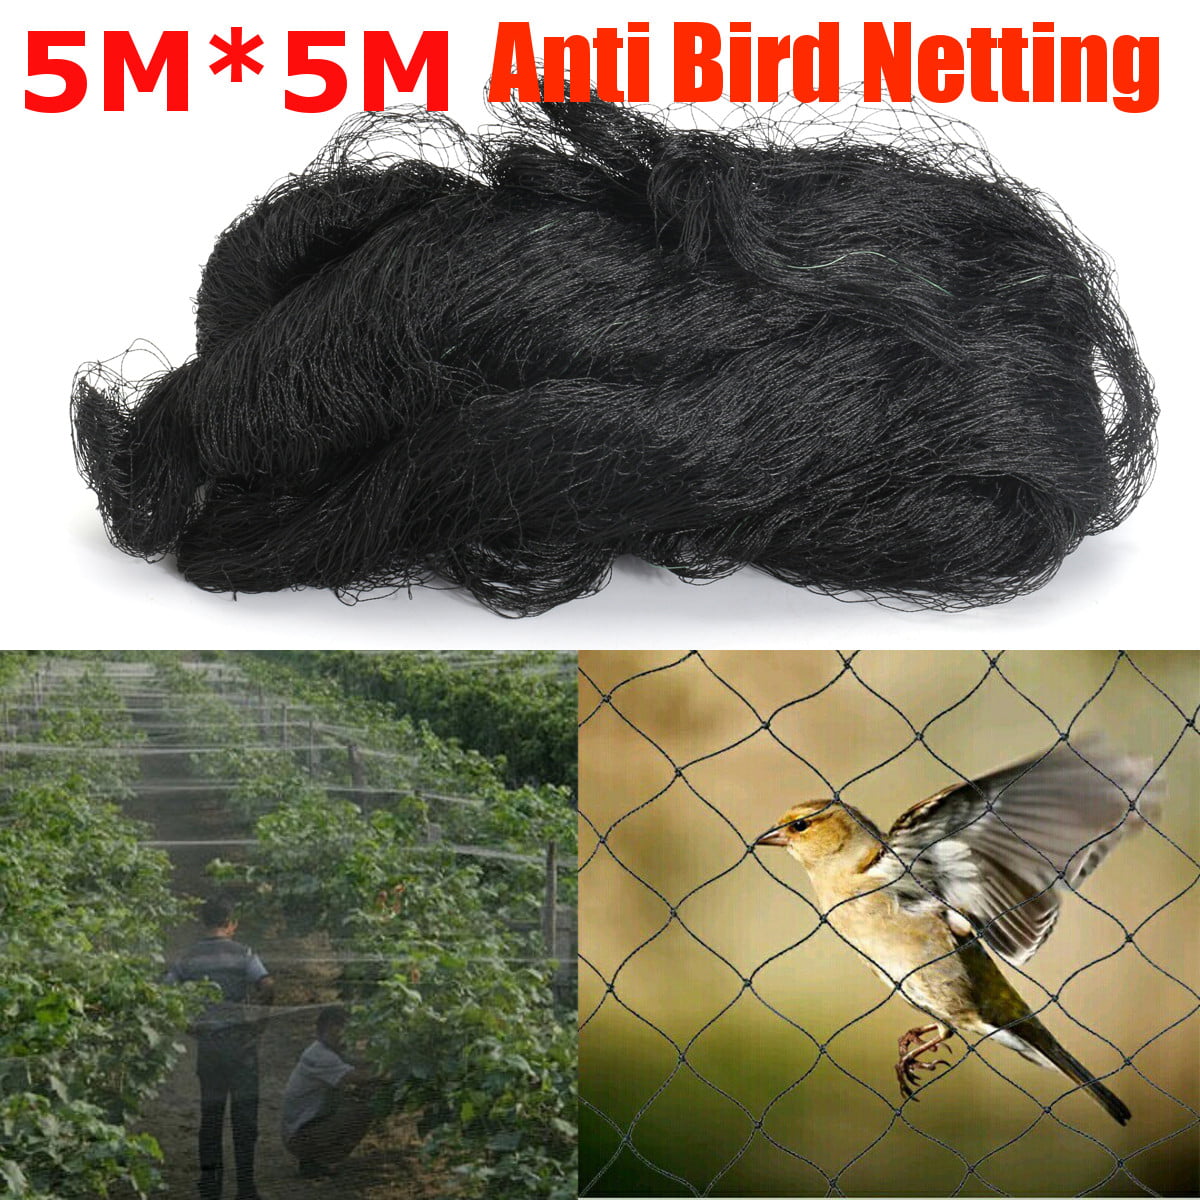 succeedw 5m x 5m Bird Netting Heavy Duty Anti Bird Protective Net Garden Plant Netting Protect Birds netting for Plants Fruit Trees